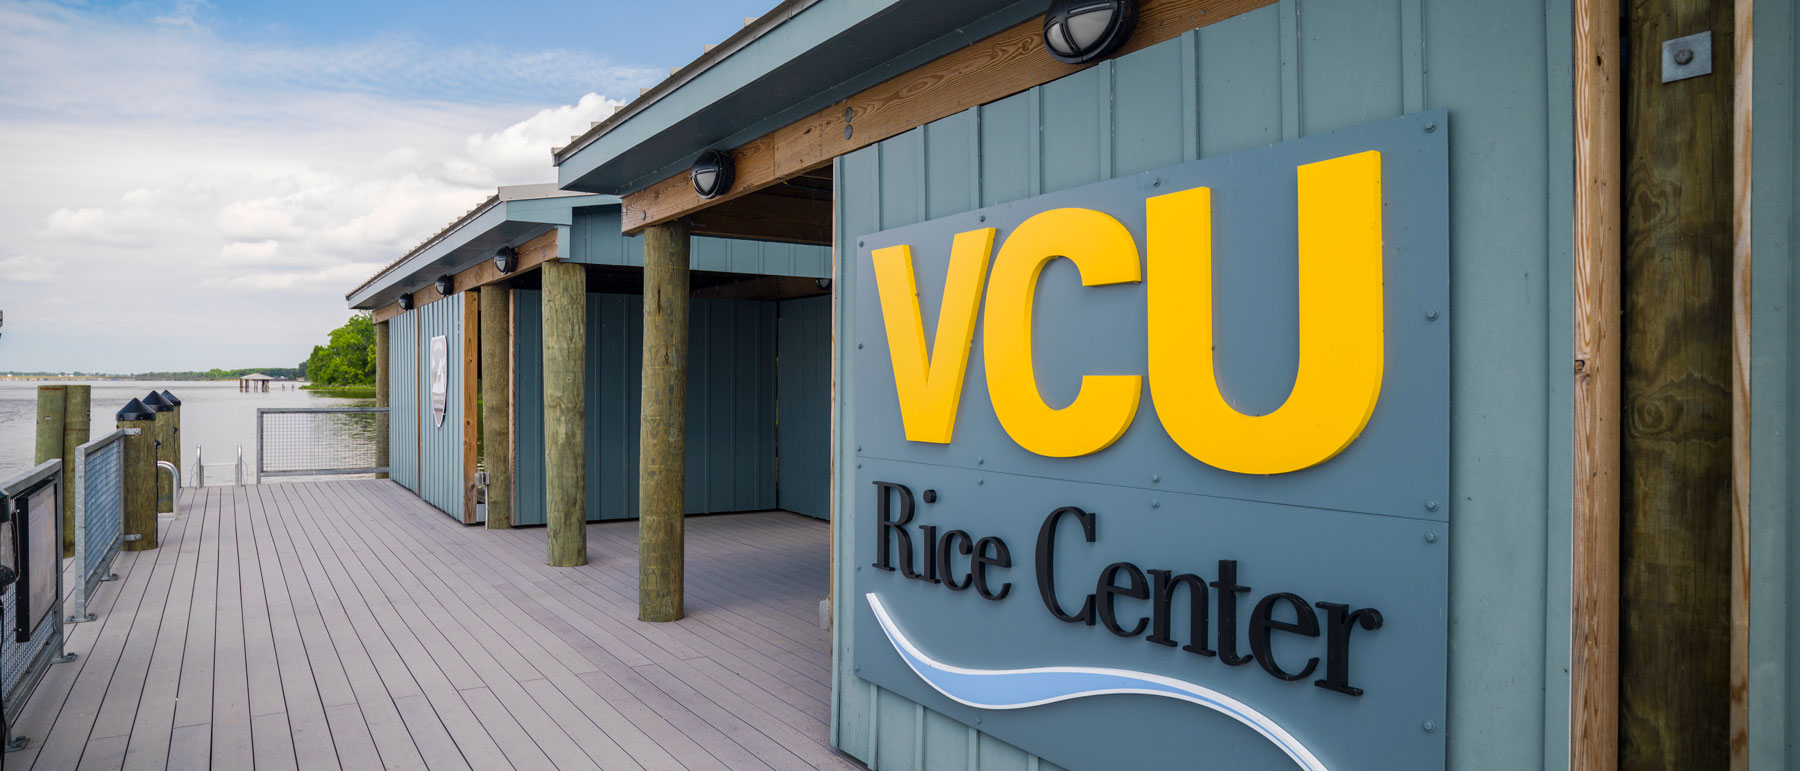 v.c.u. rice rivers center pier facility on the james river